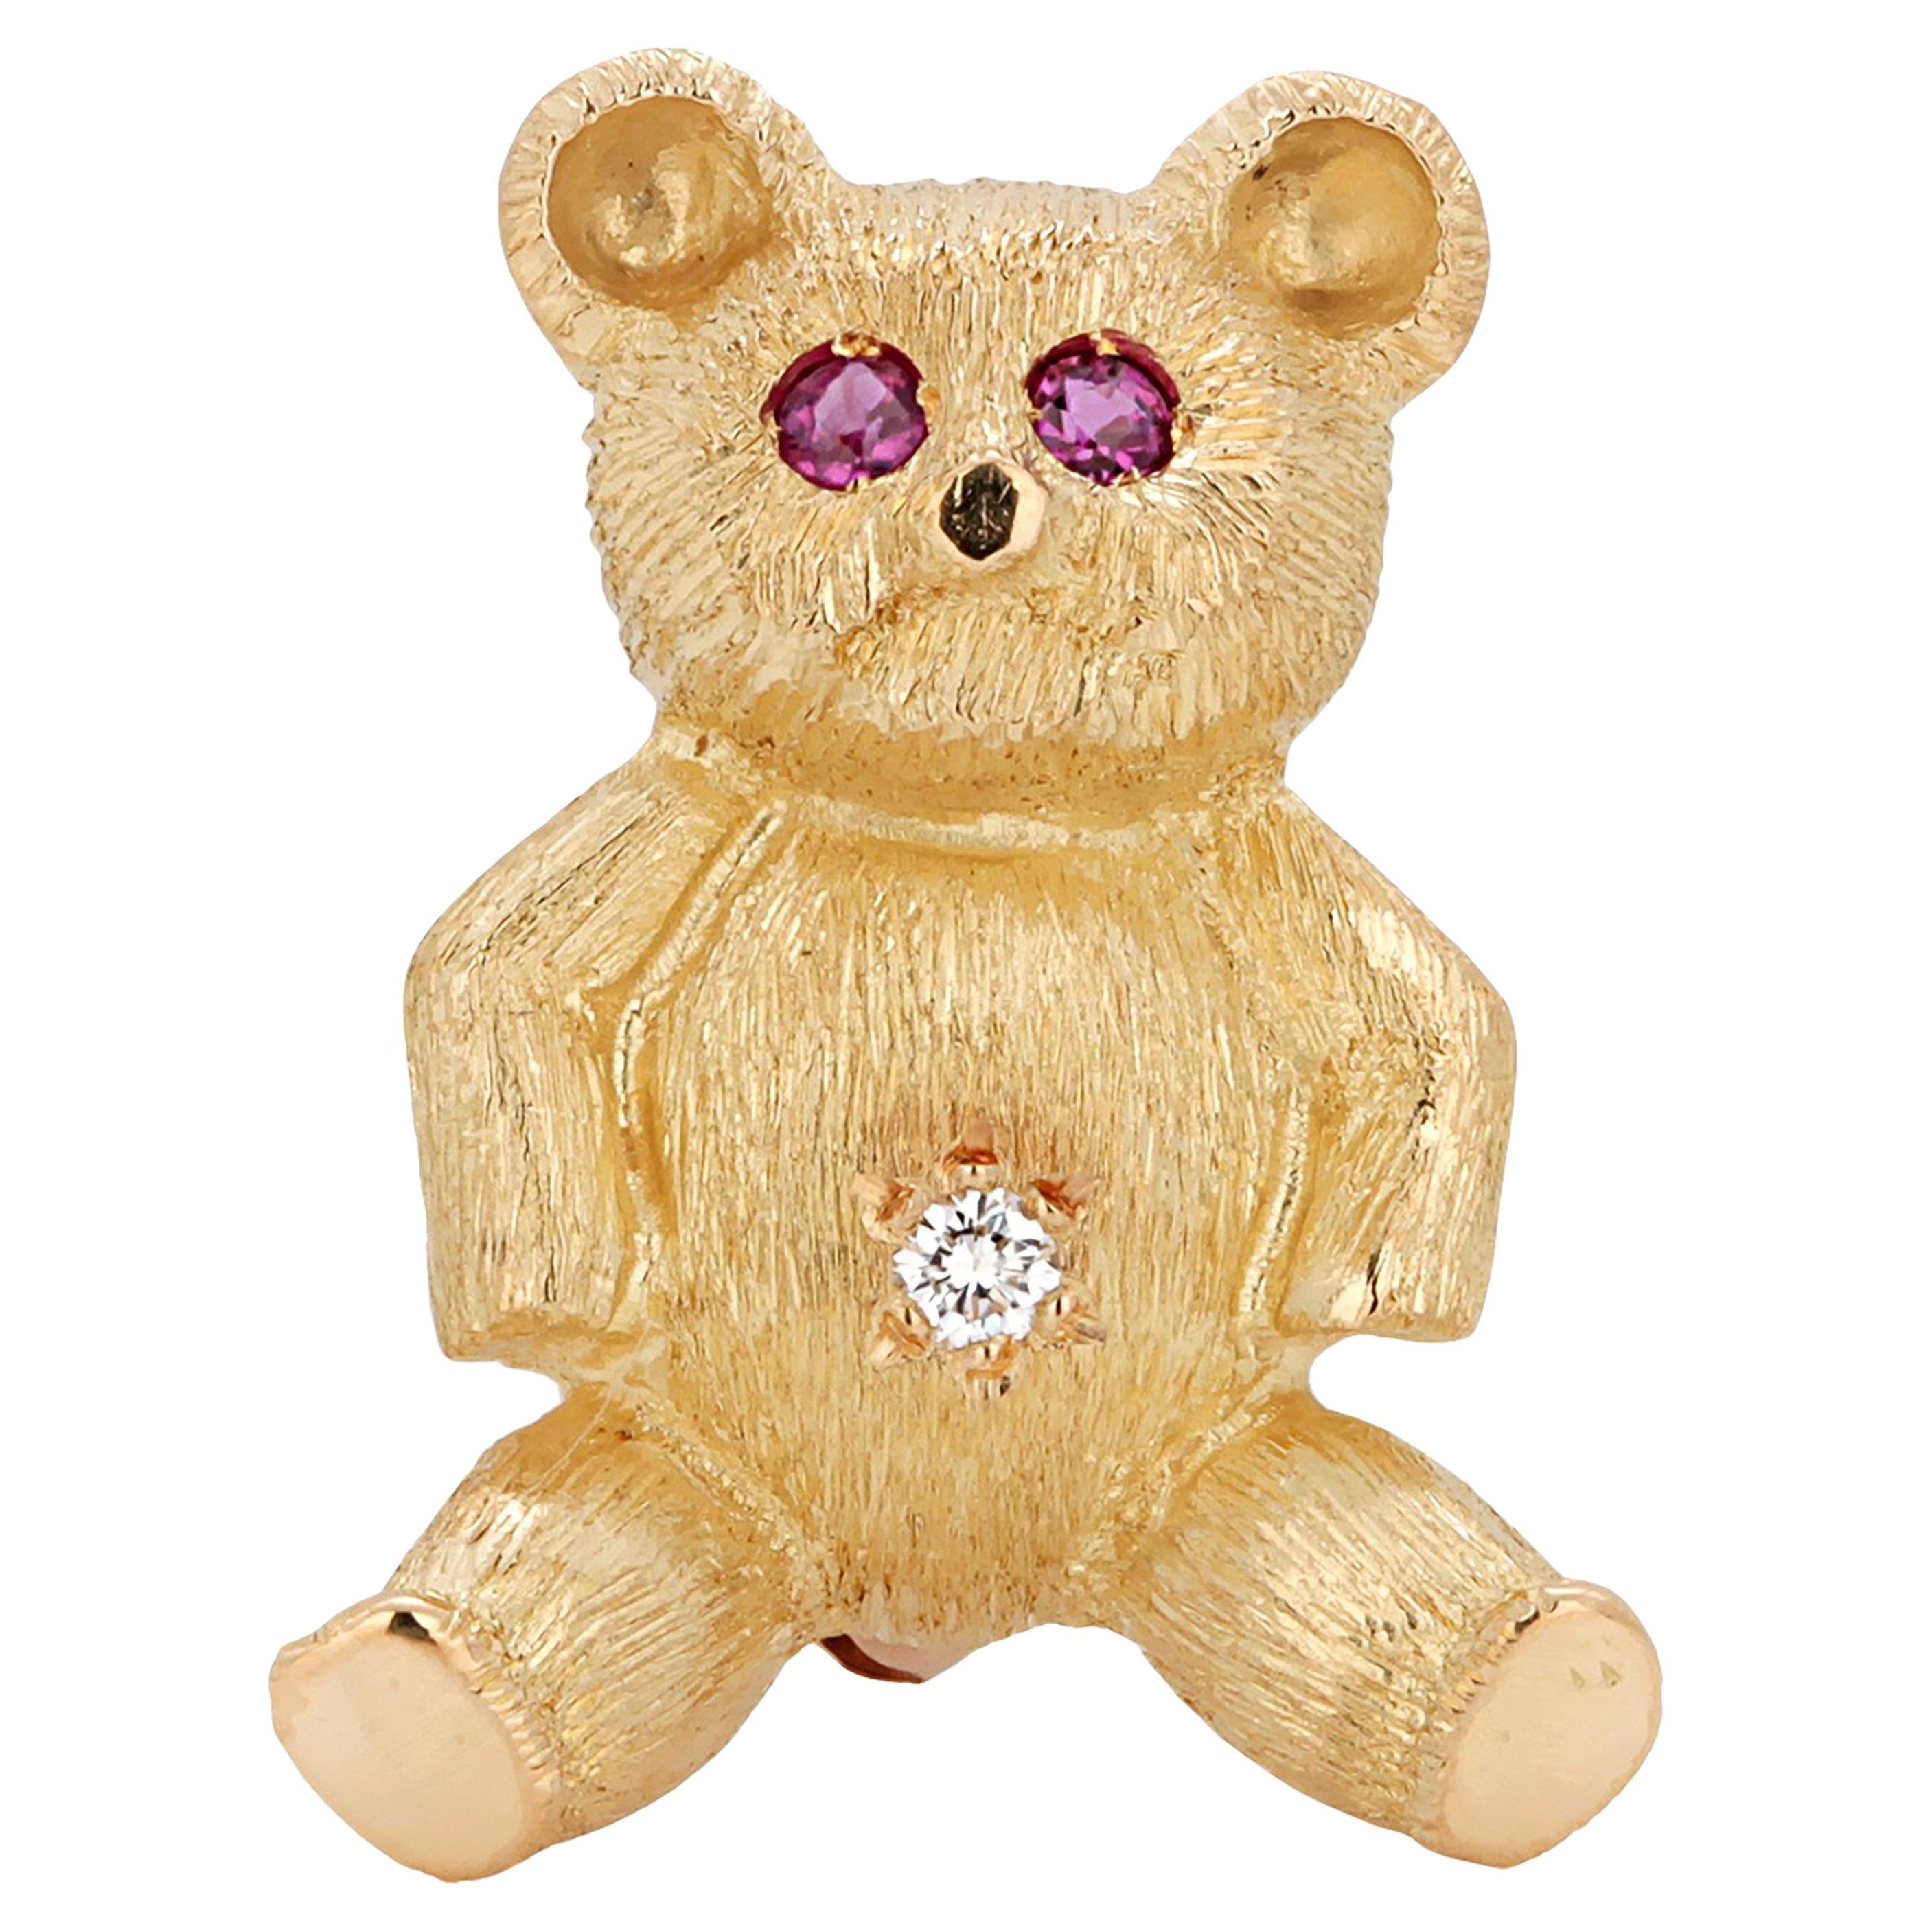 Louis Vuitton Teddy Bear - 5 For Sale on 1stDibs